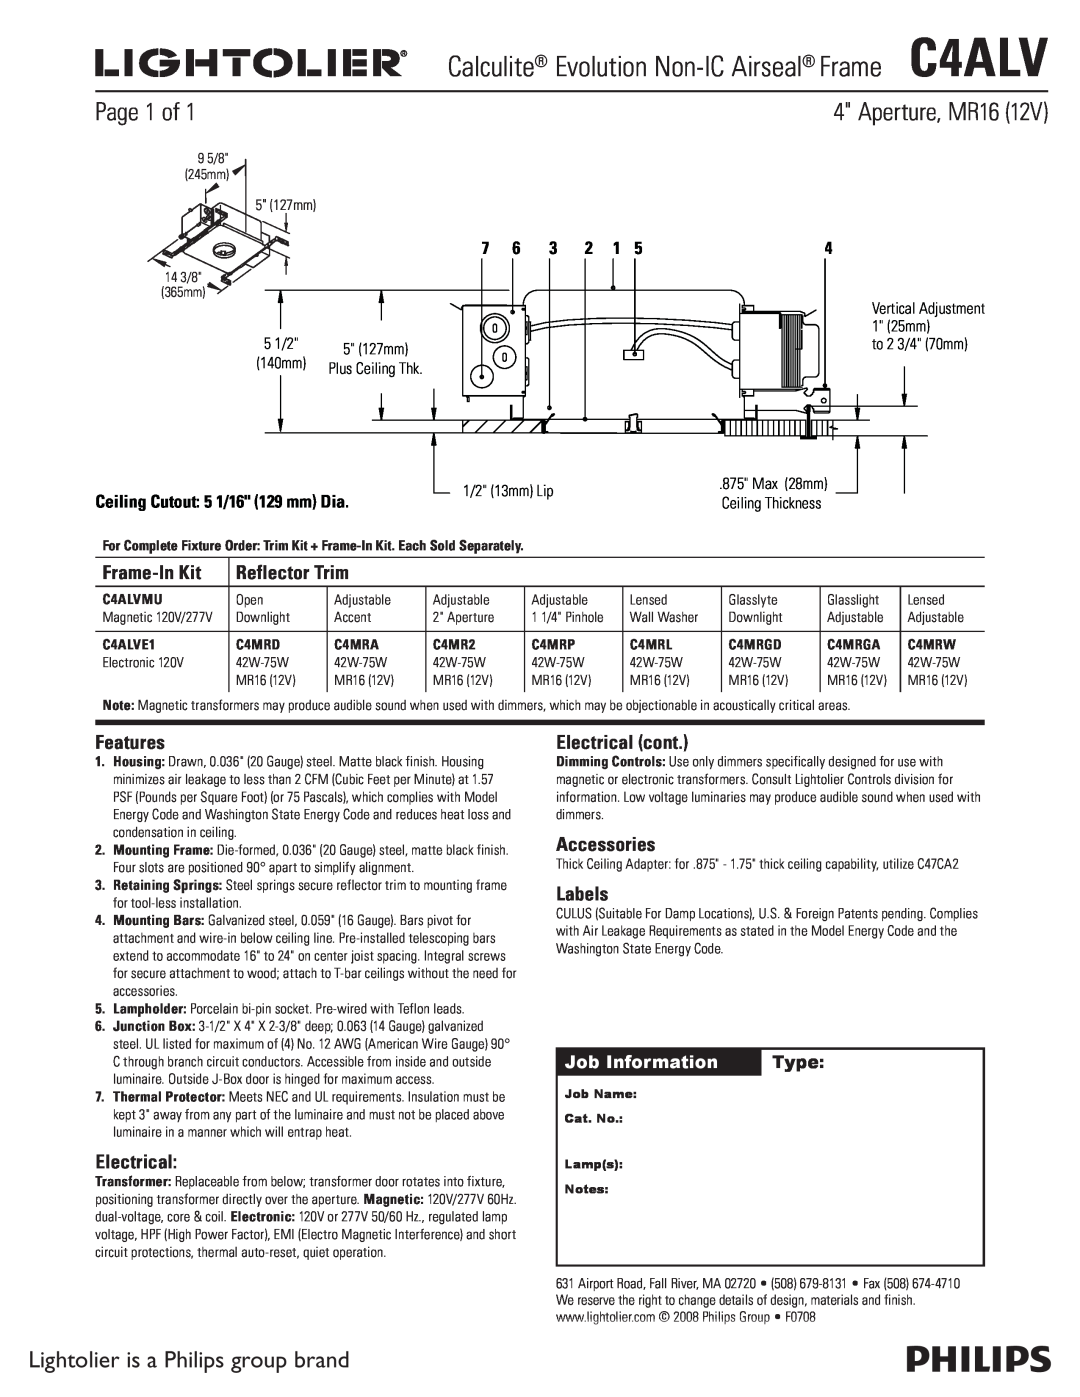 Lightolier manual Aperture, MR16, Calculite Evolution Non-ICAirseal FrameC4ALV, Page 1 of, Frame-InKit, Reflector Trim 